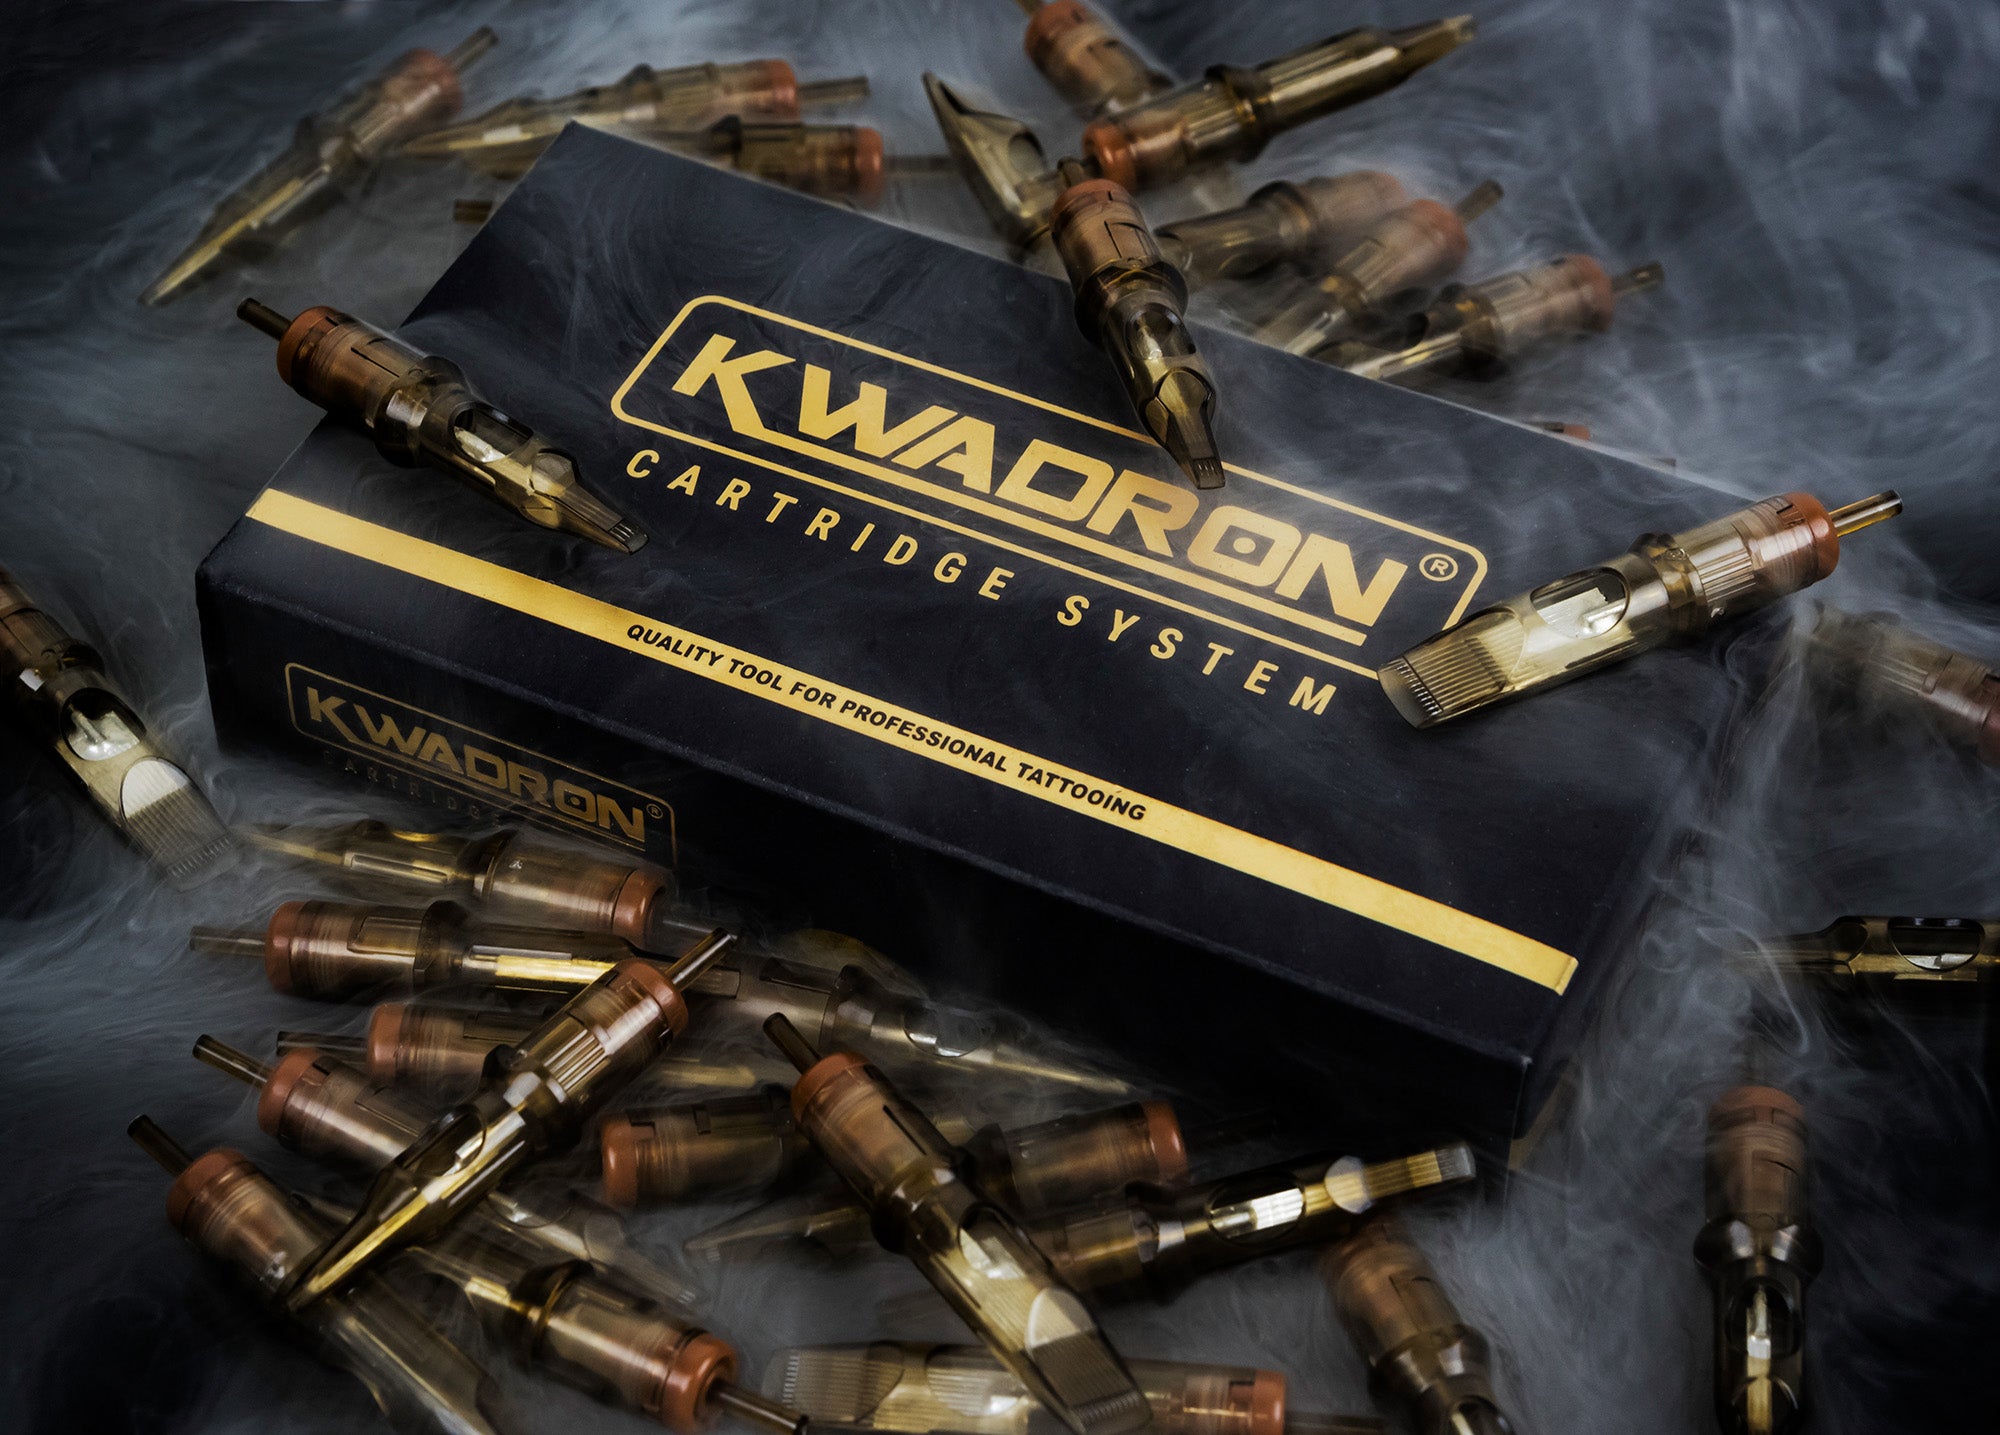 kwadron-tattoo-cartridge-box